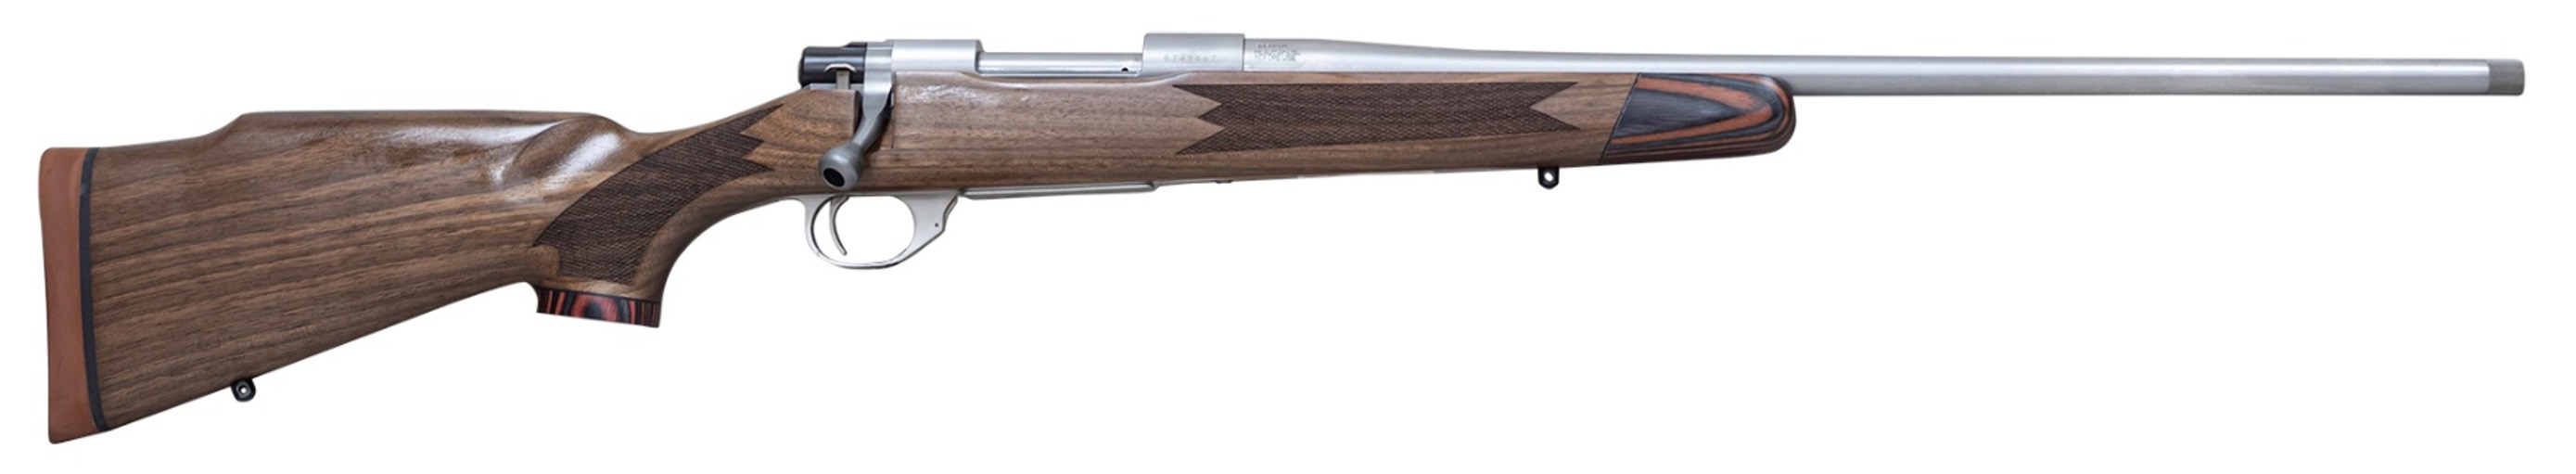 LSI HOWA M1500 SUPER DELUXE WALNUT 308WIN SS - Sale